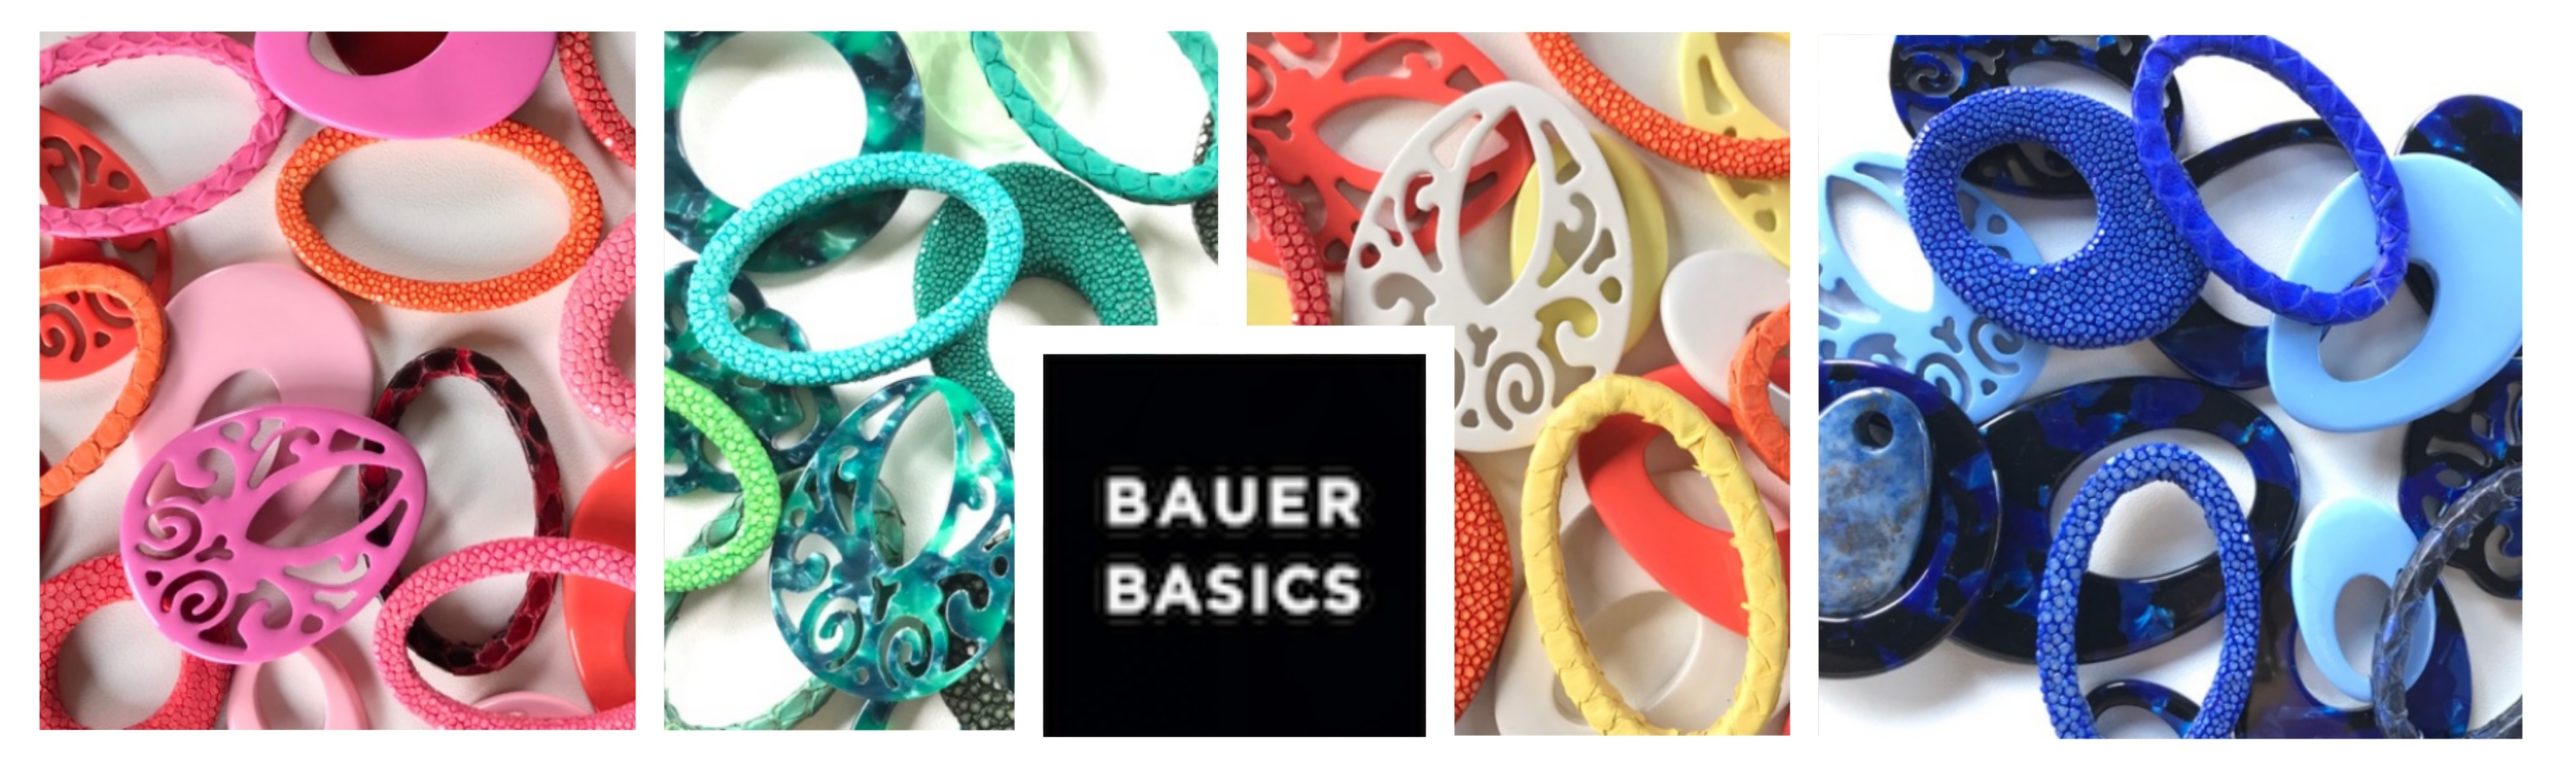 banner Bauer Basics